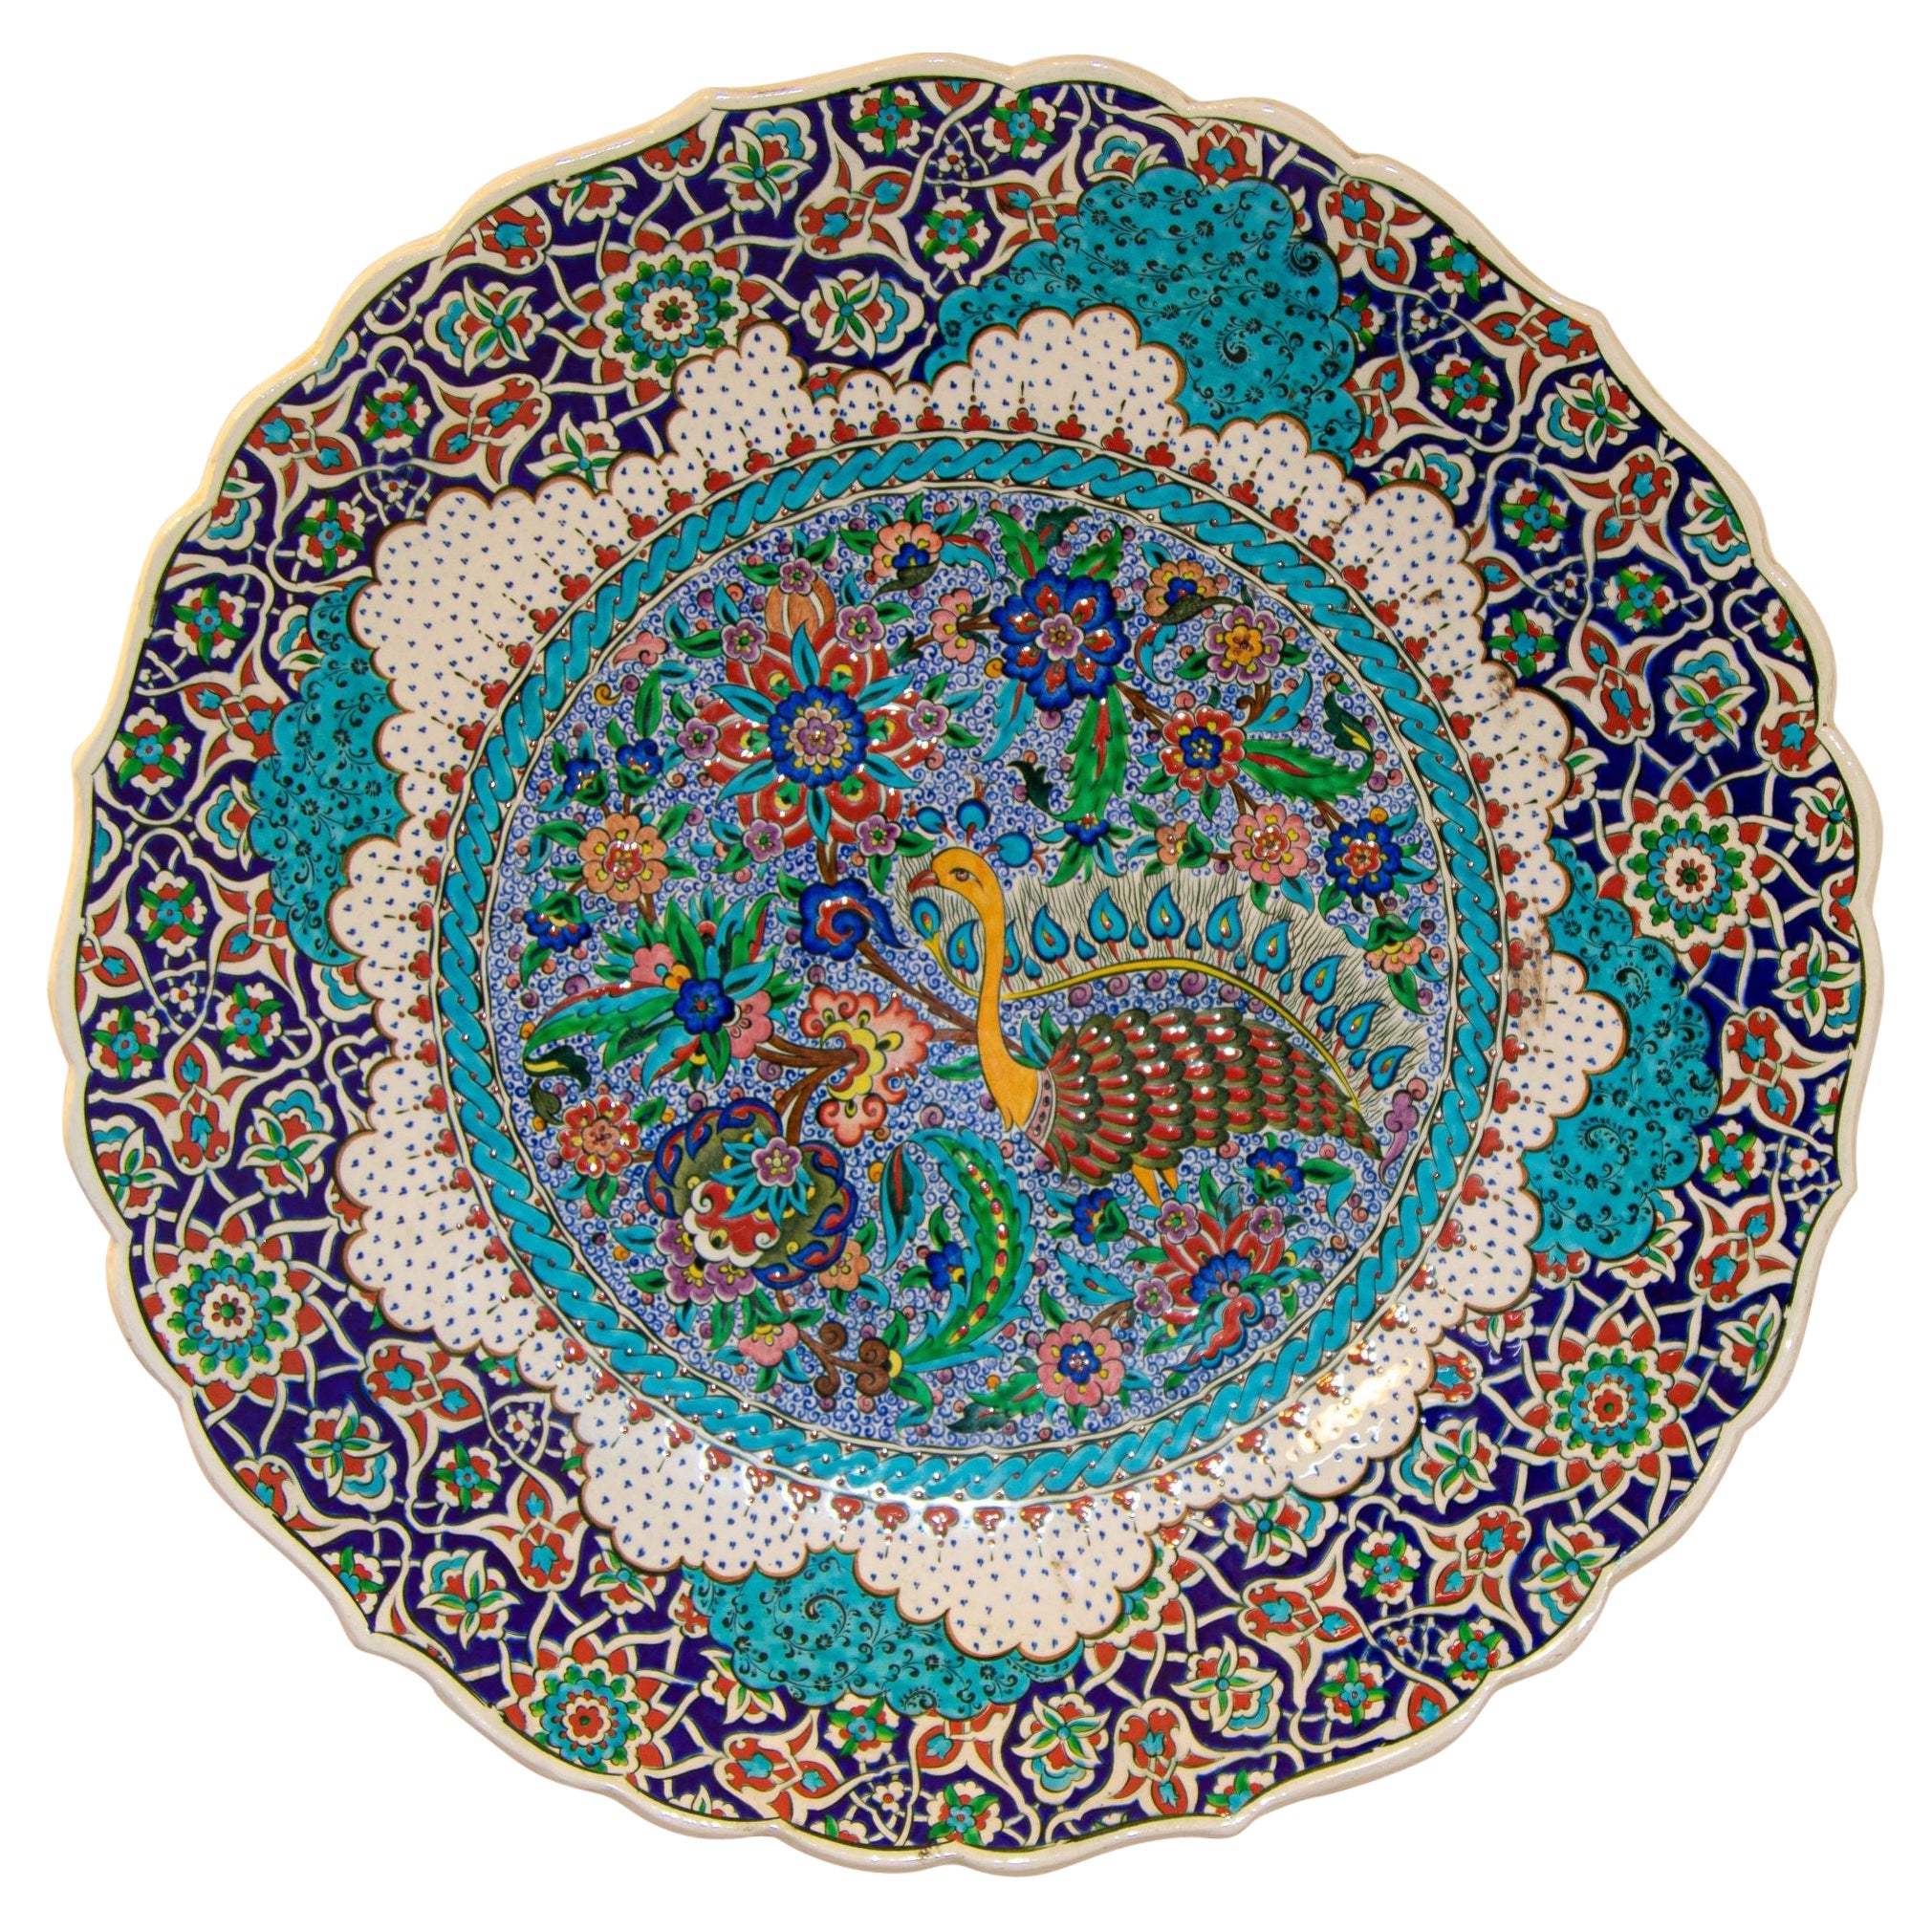 Hand Painted Decorative Plate After an Original Iznik 16th C. Ottoman Design